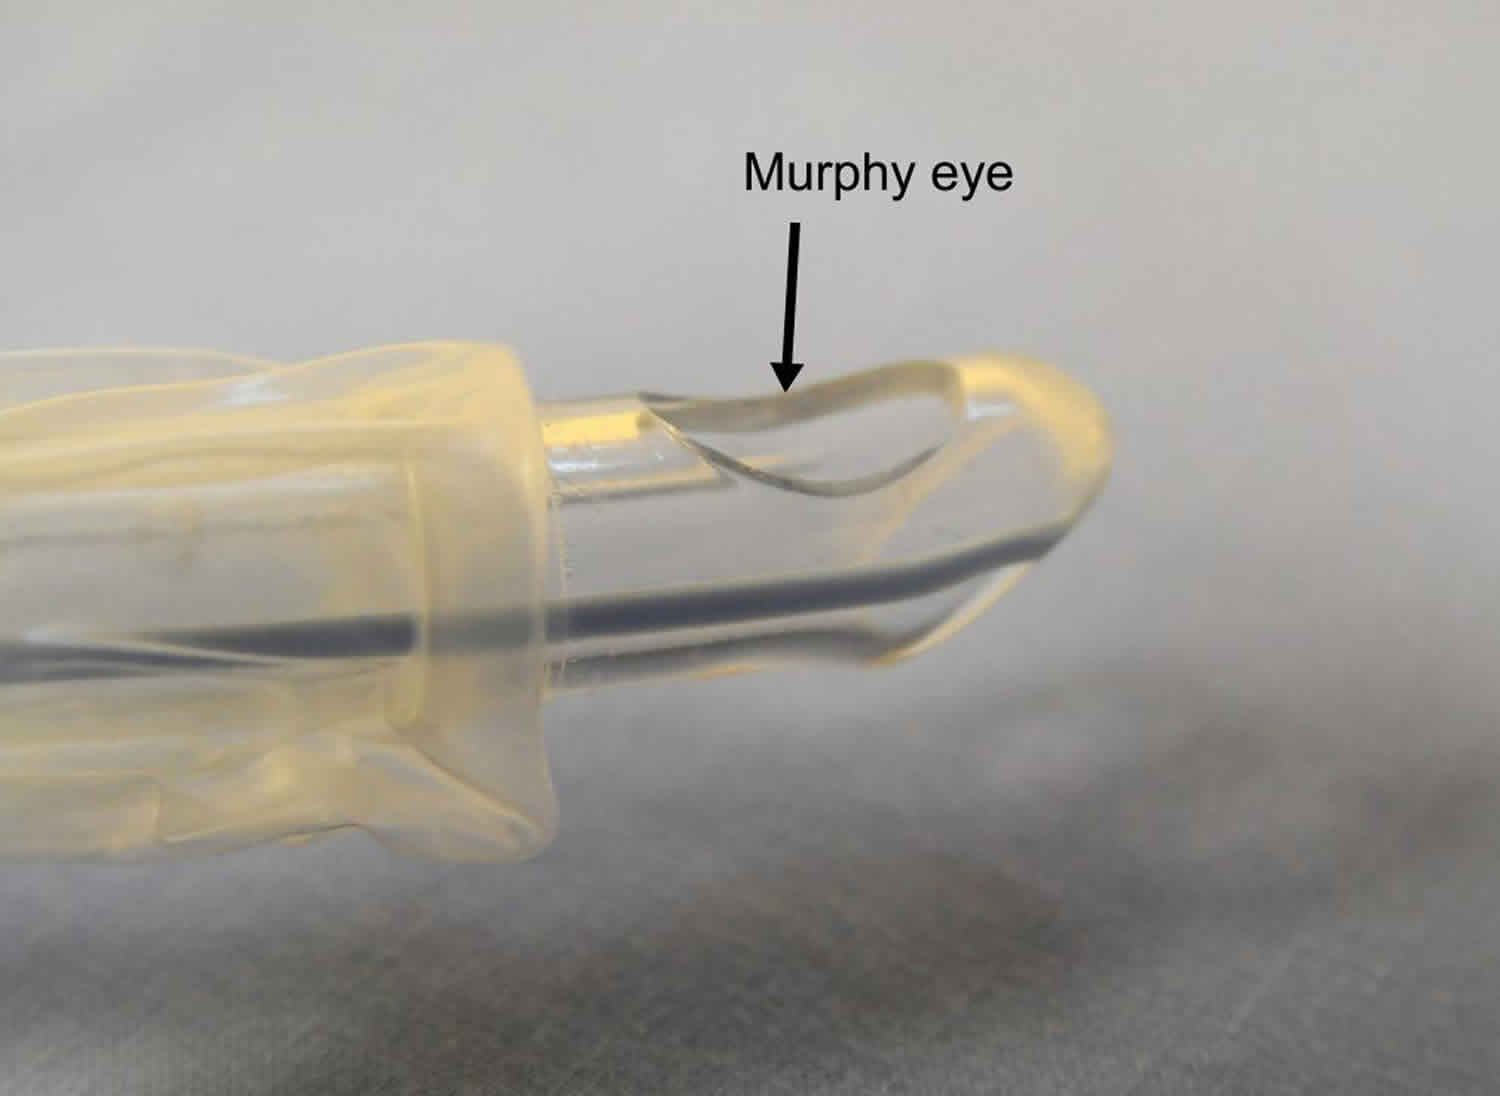 Murphy eye of an endotracheal tube